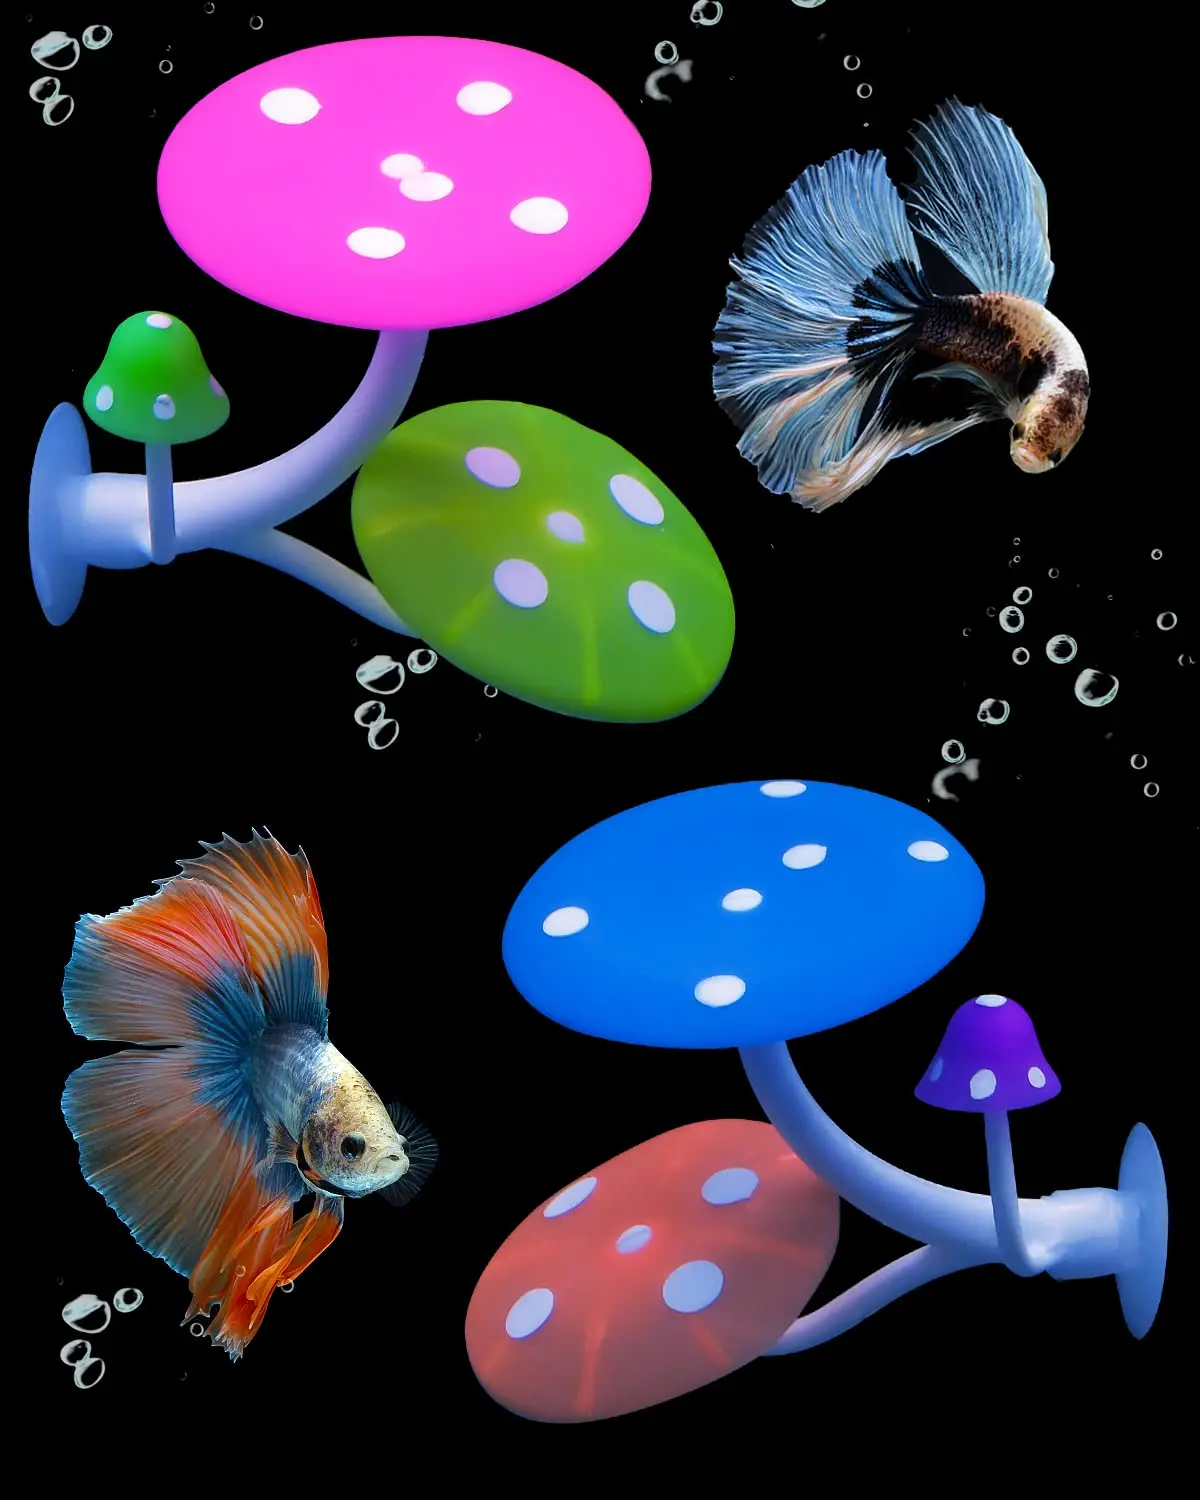 

Mushroom Hammock Soft Aquarium Fish Breeding Playing With Suction Cup Silicone Ornament Decoration Colorful Lifelike Landscape